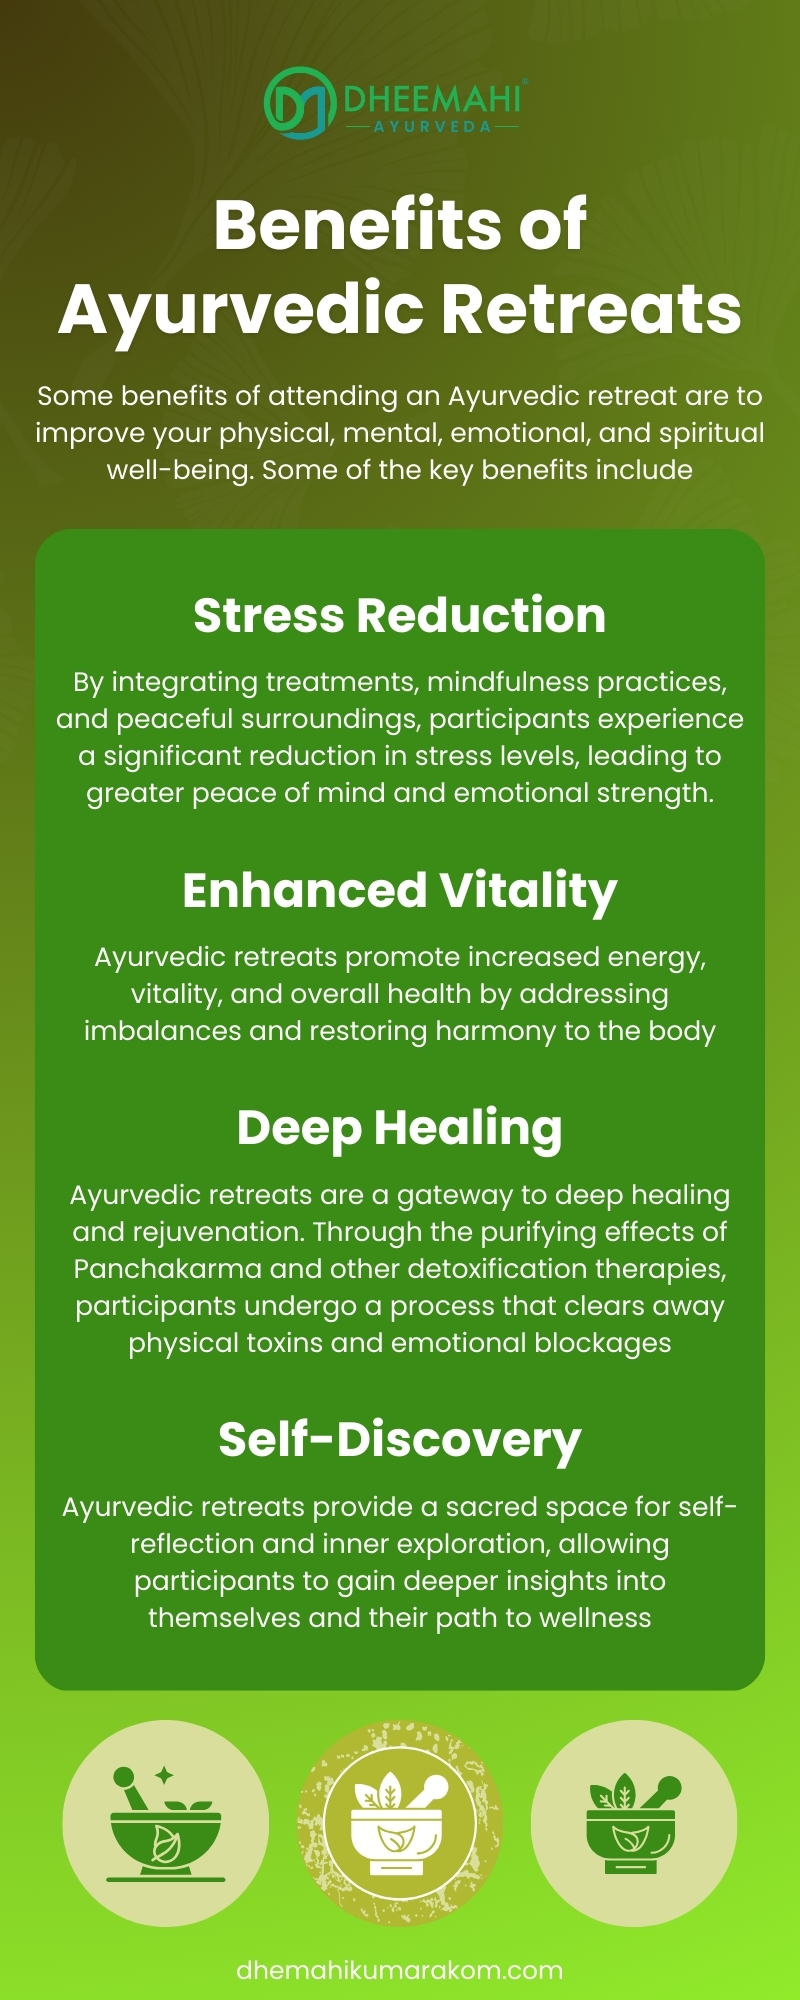 Benefits of Ayurvedic Retreats